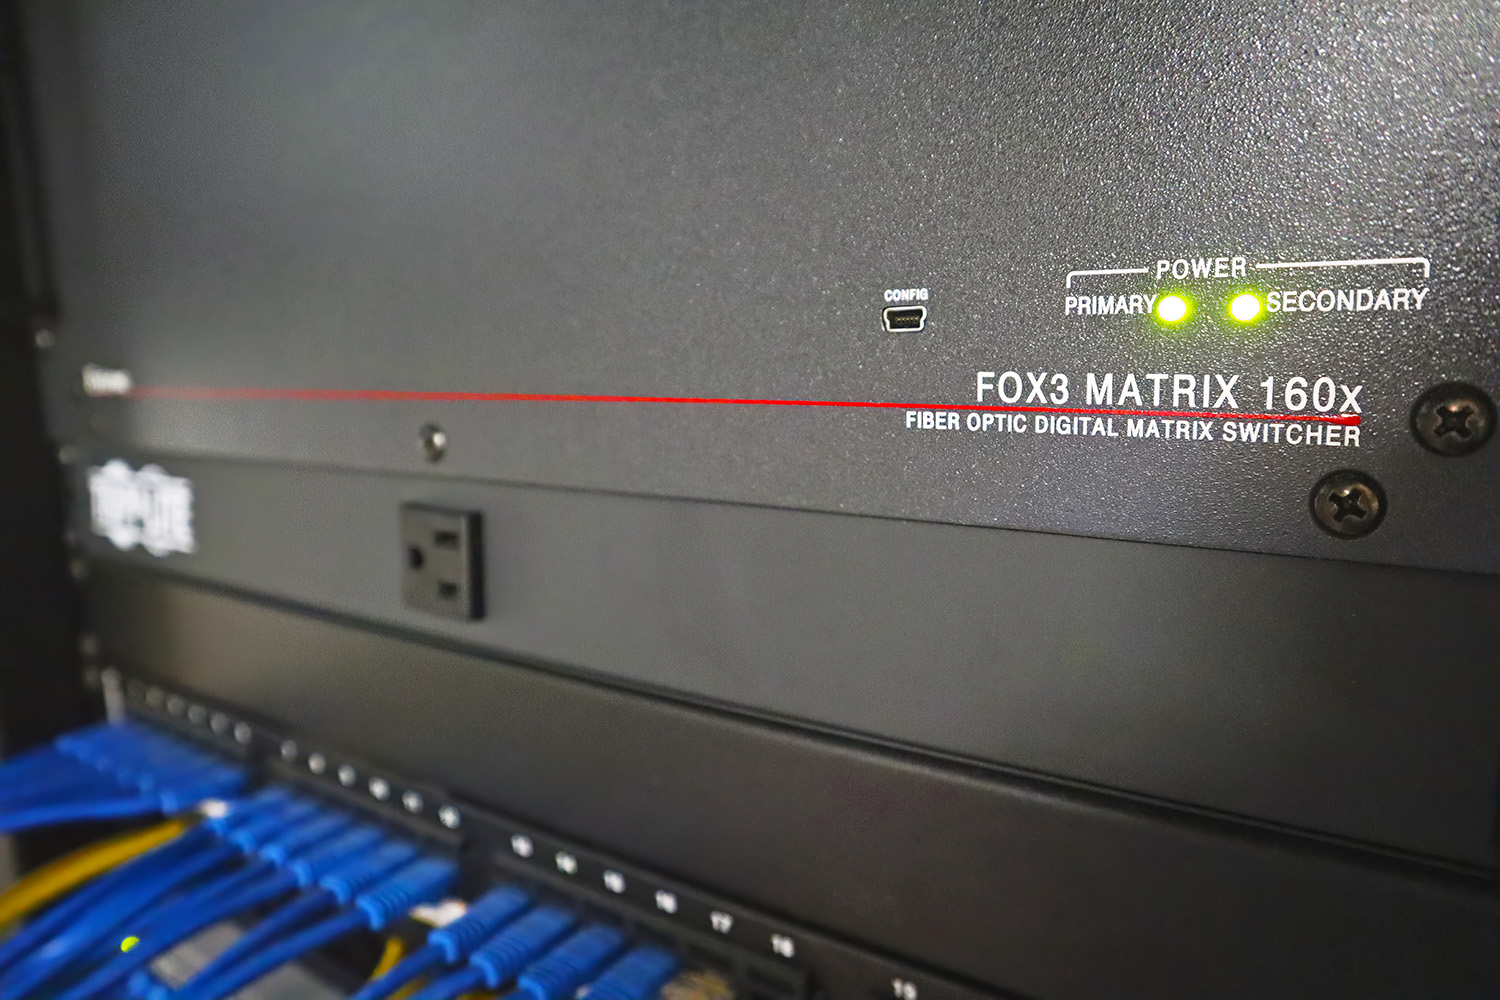 IIS 选用不含前面板控制器的 FOX3 矩阵切换器型号，其目的是确保仅获得授权的用户可访问 EOC 的 AV 系统